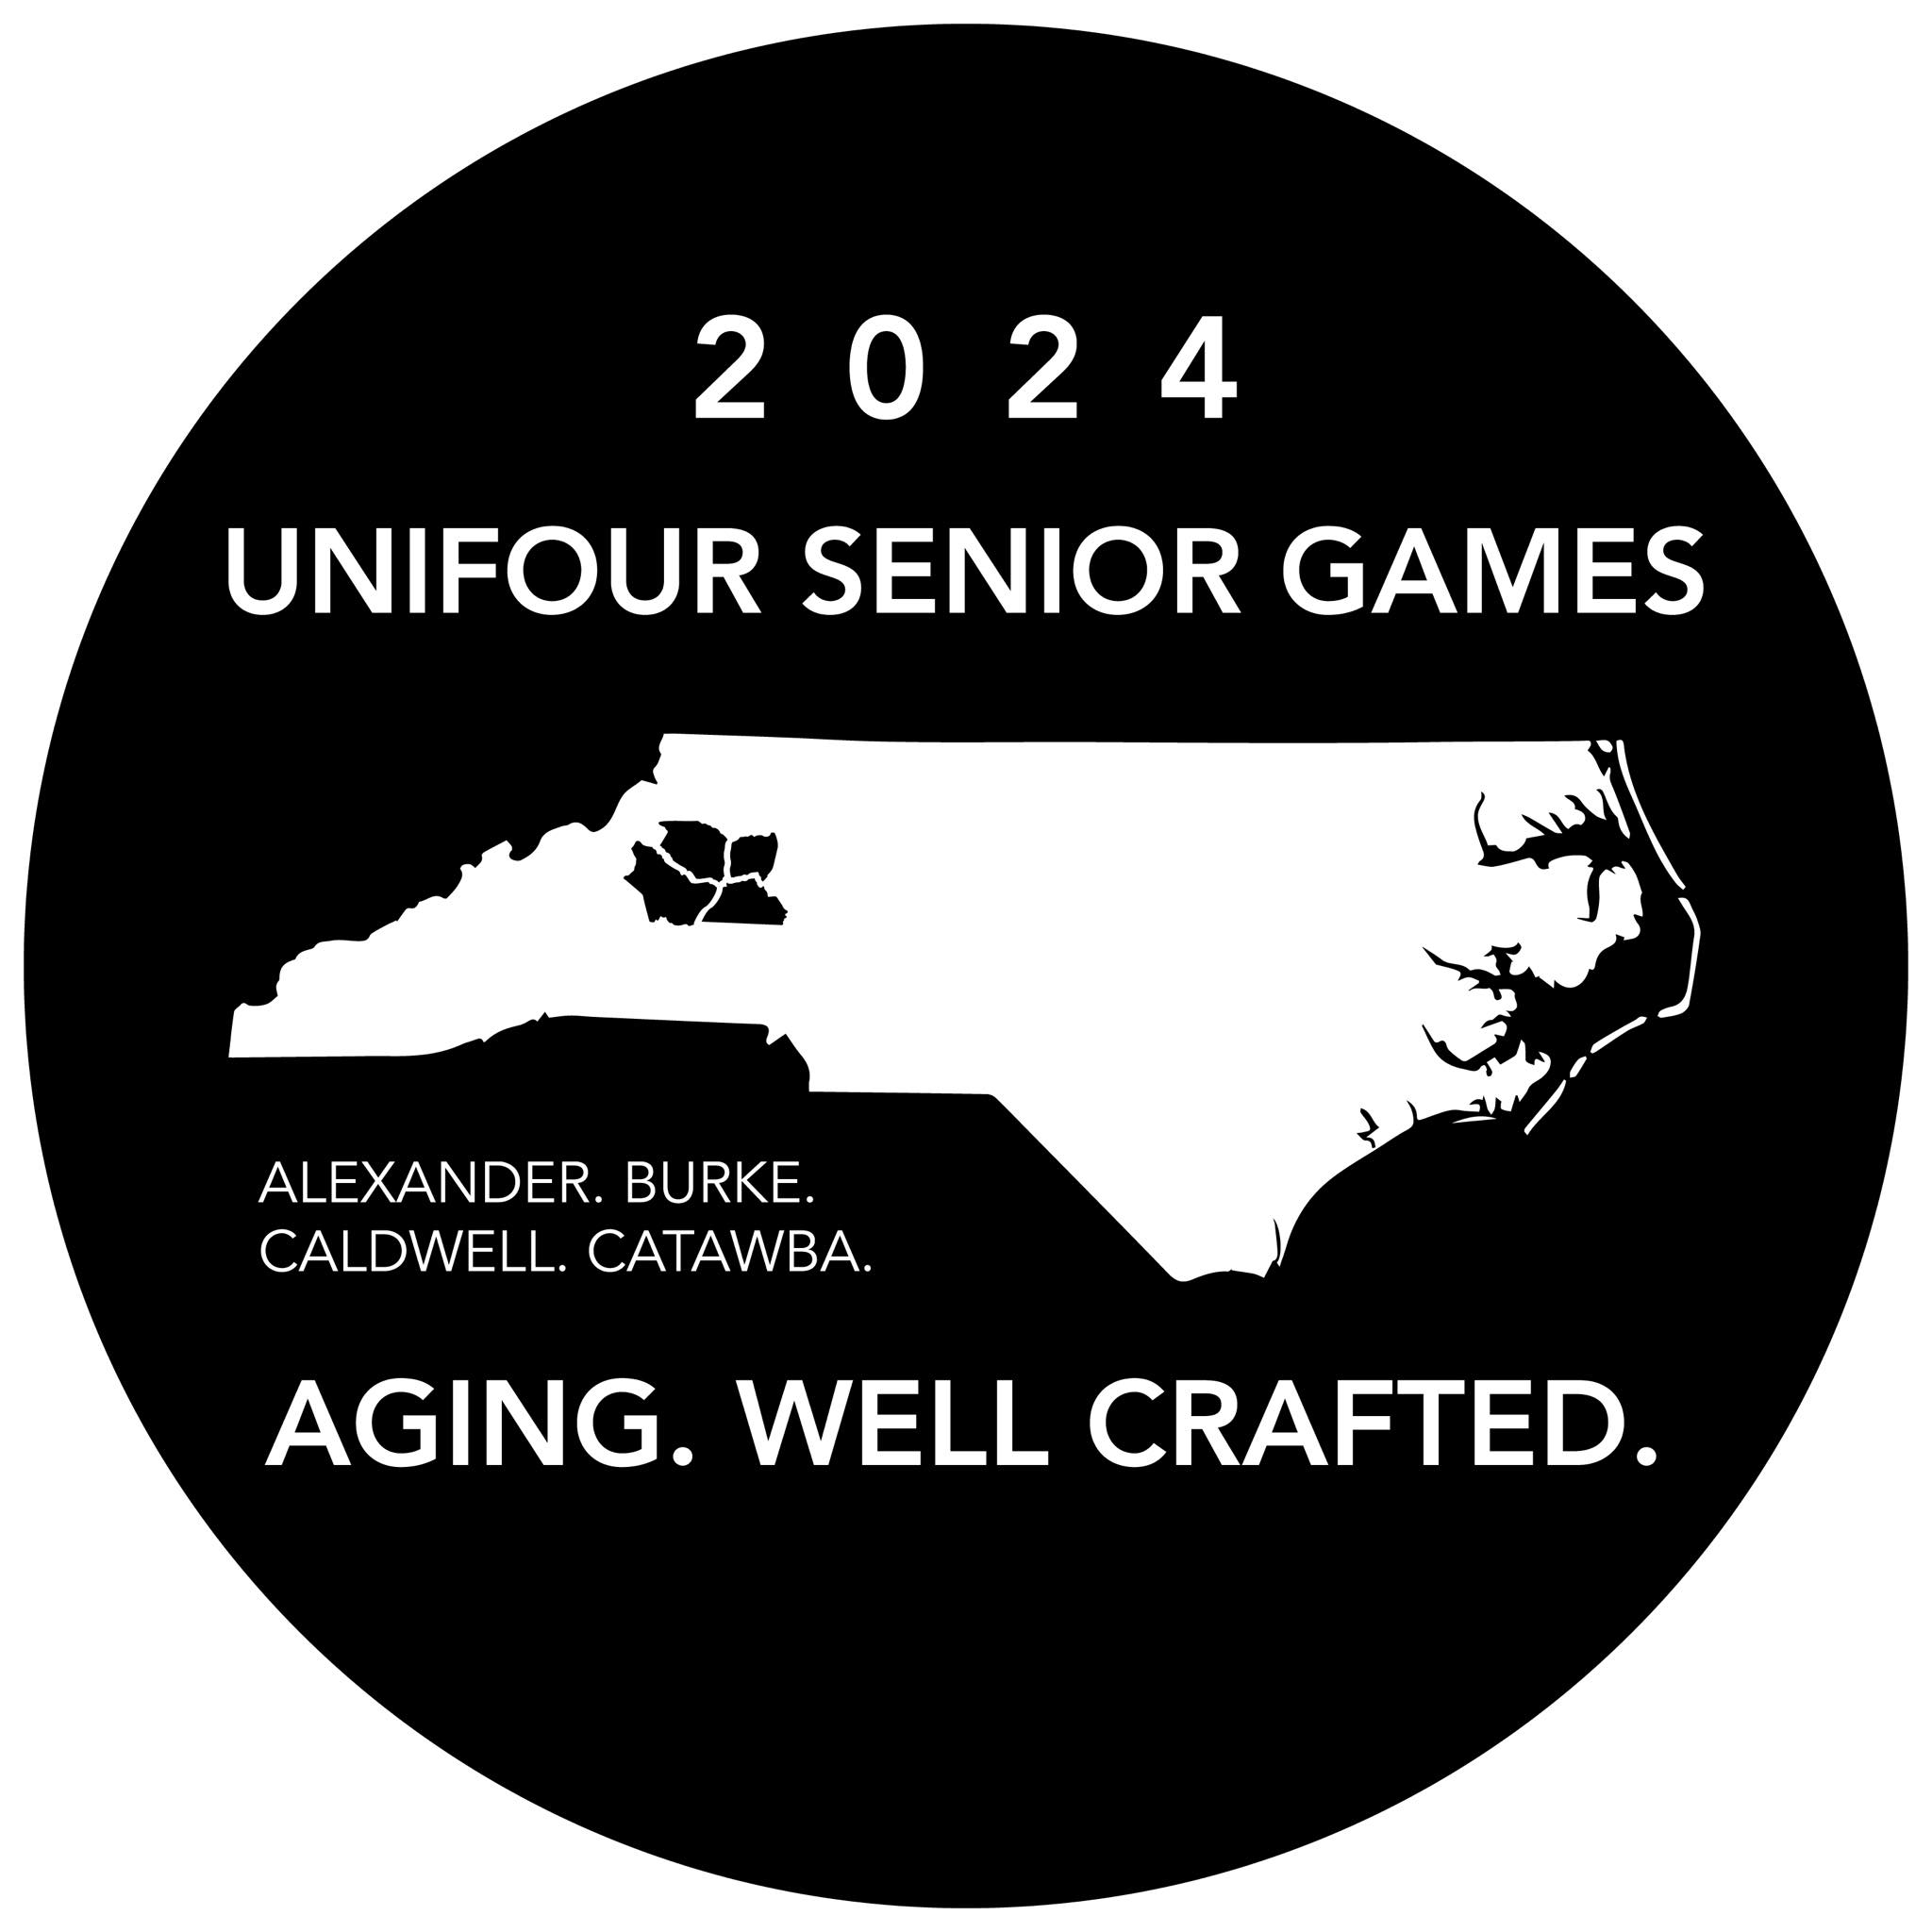 text 2024 unifour senior games and outline of north carolina map